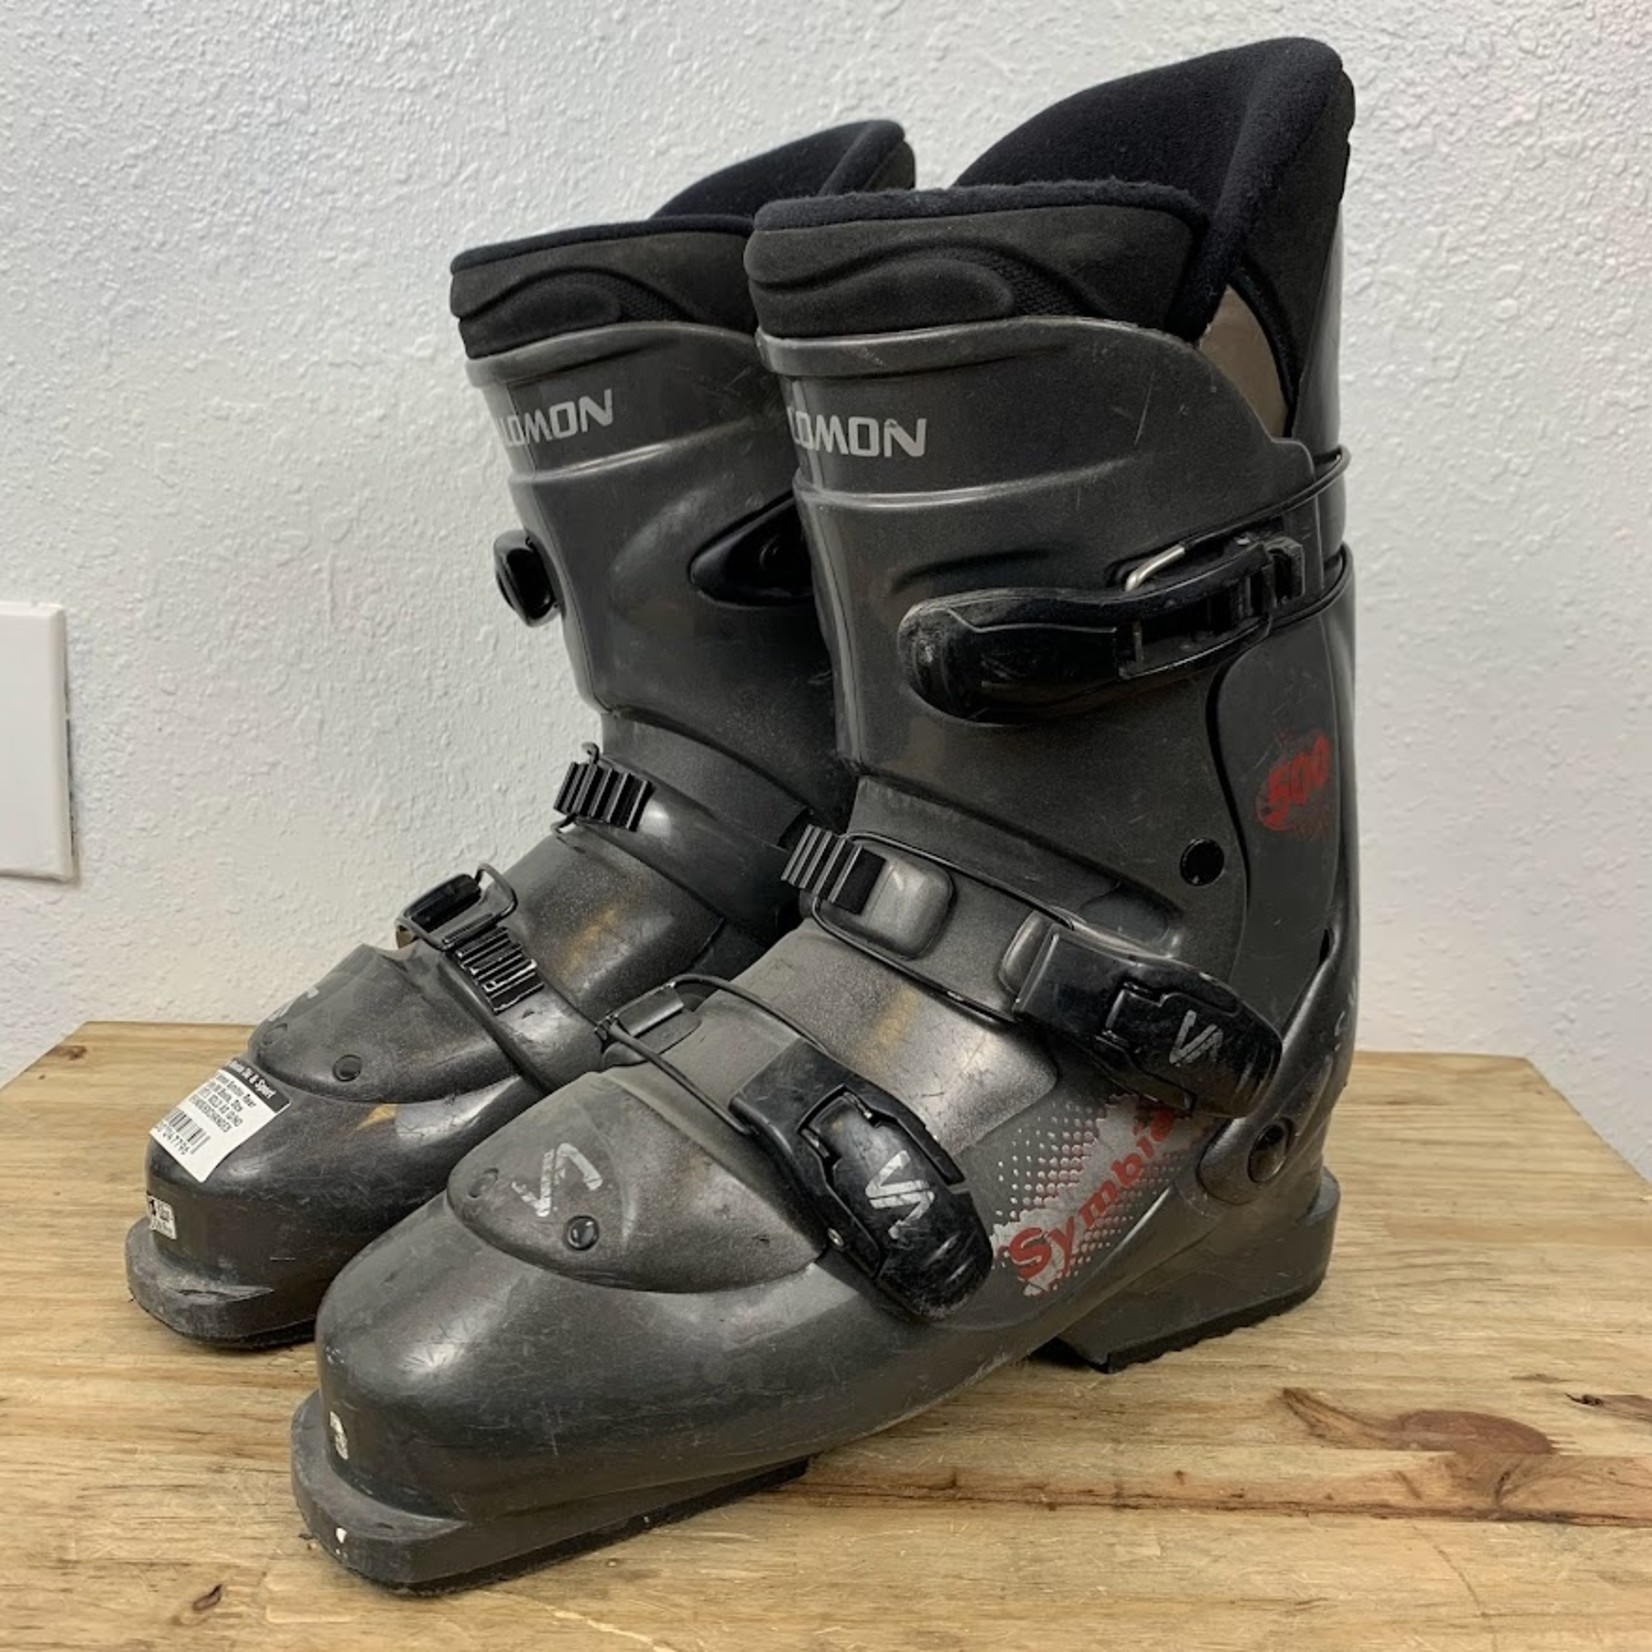 Salomon Salomon Symbio Rear Entry Ski Boots, Size 27/27.5  SOLD AS IS/NO REFUNDS/EXCHANGES